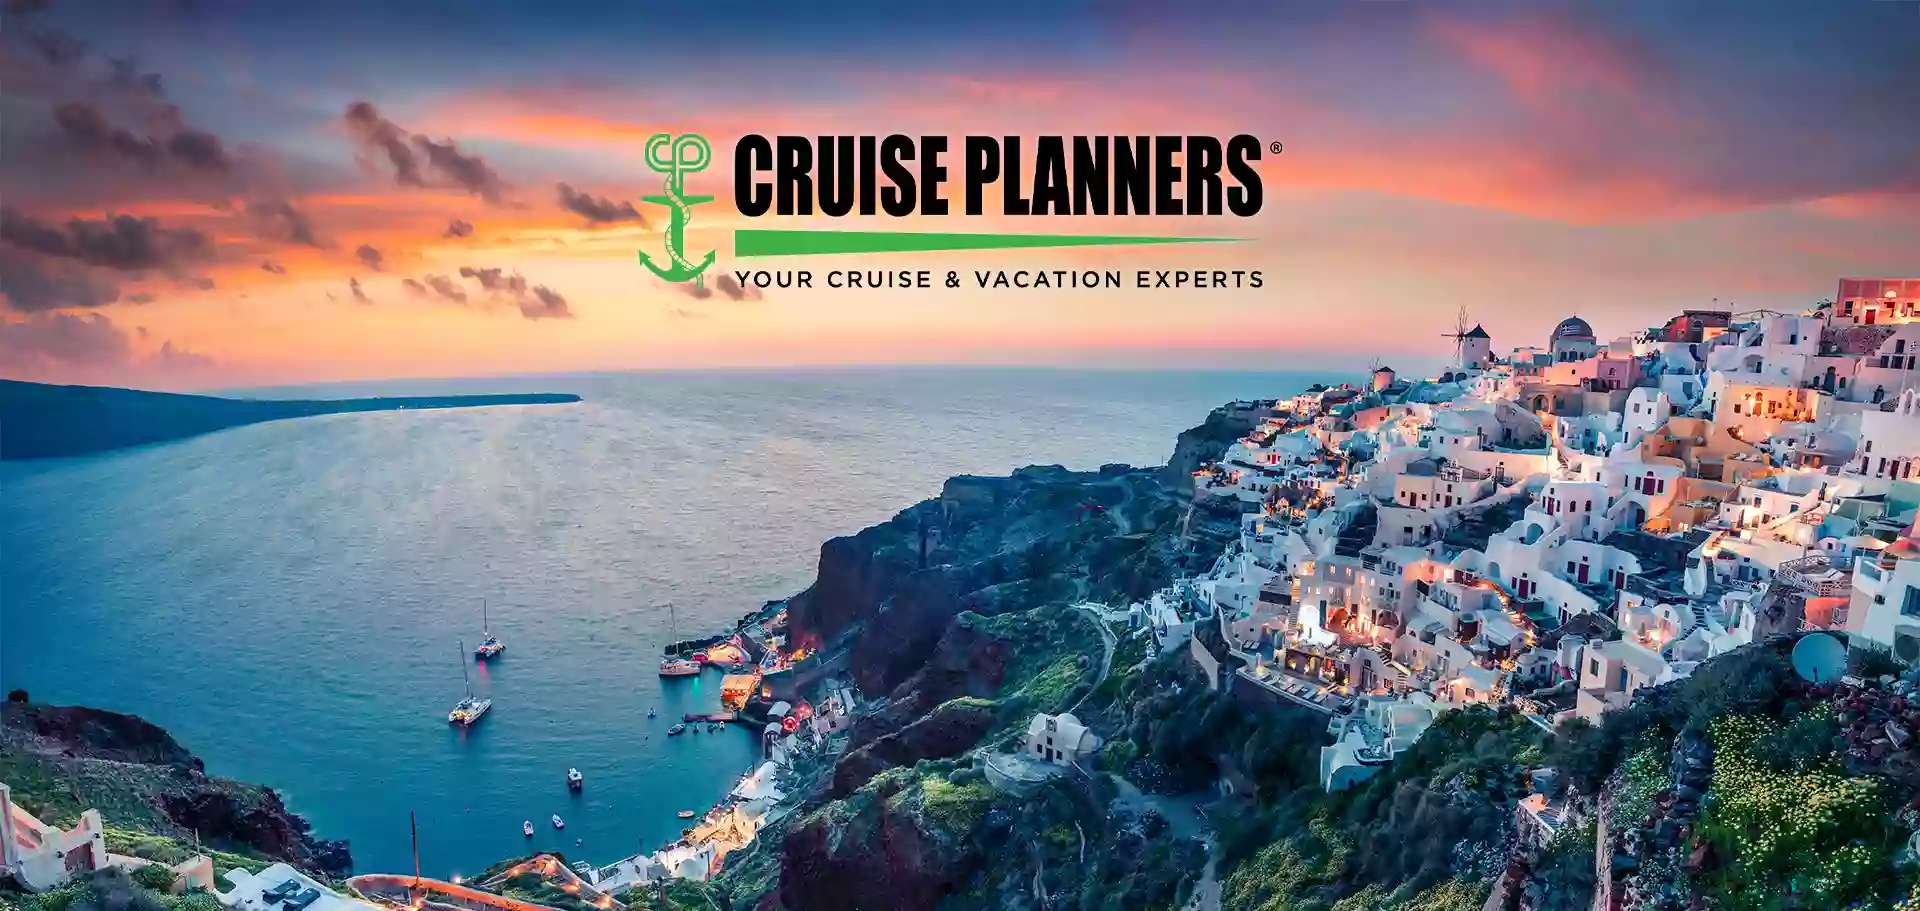 Cruise Planners Eddies Travel Services